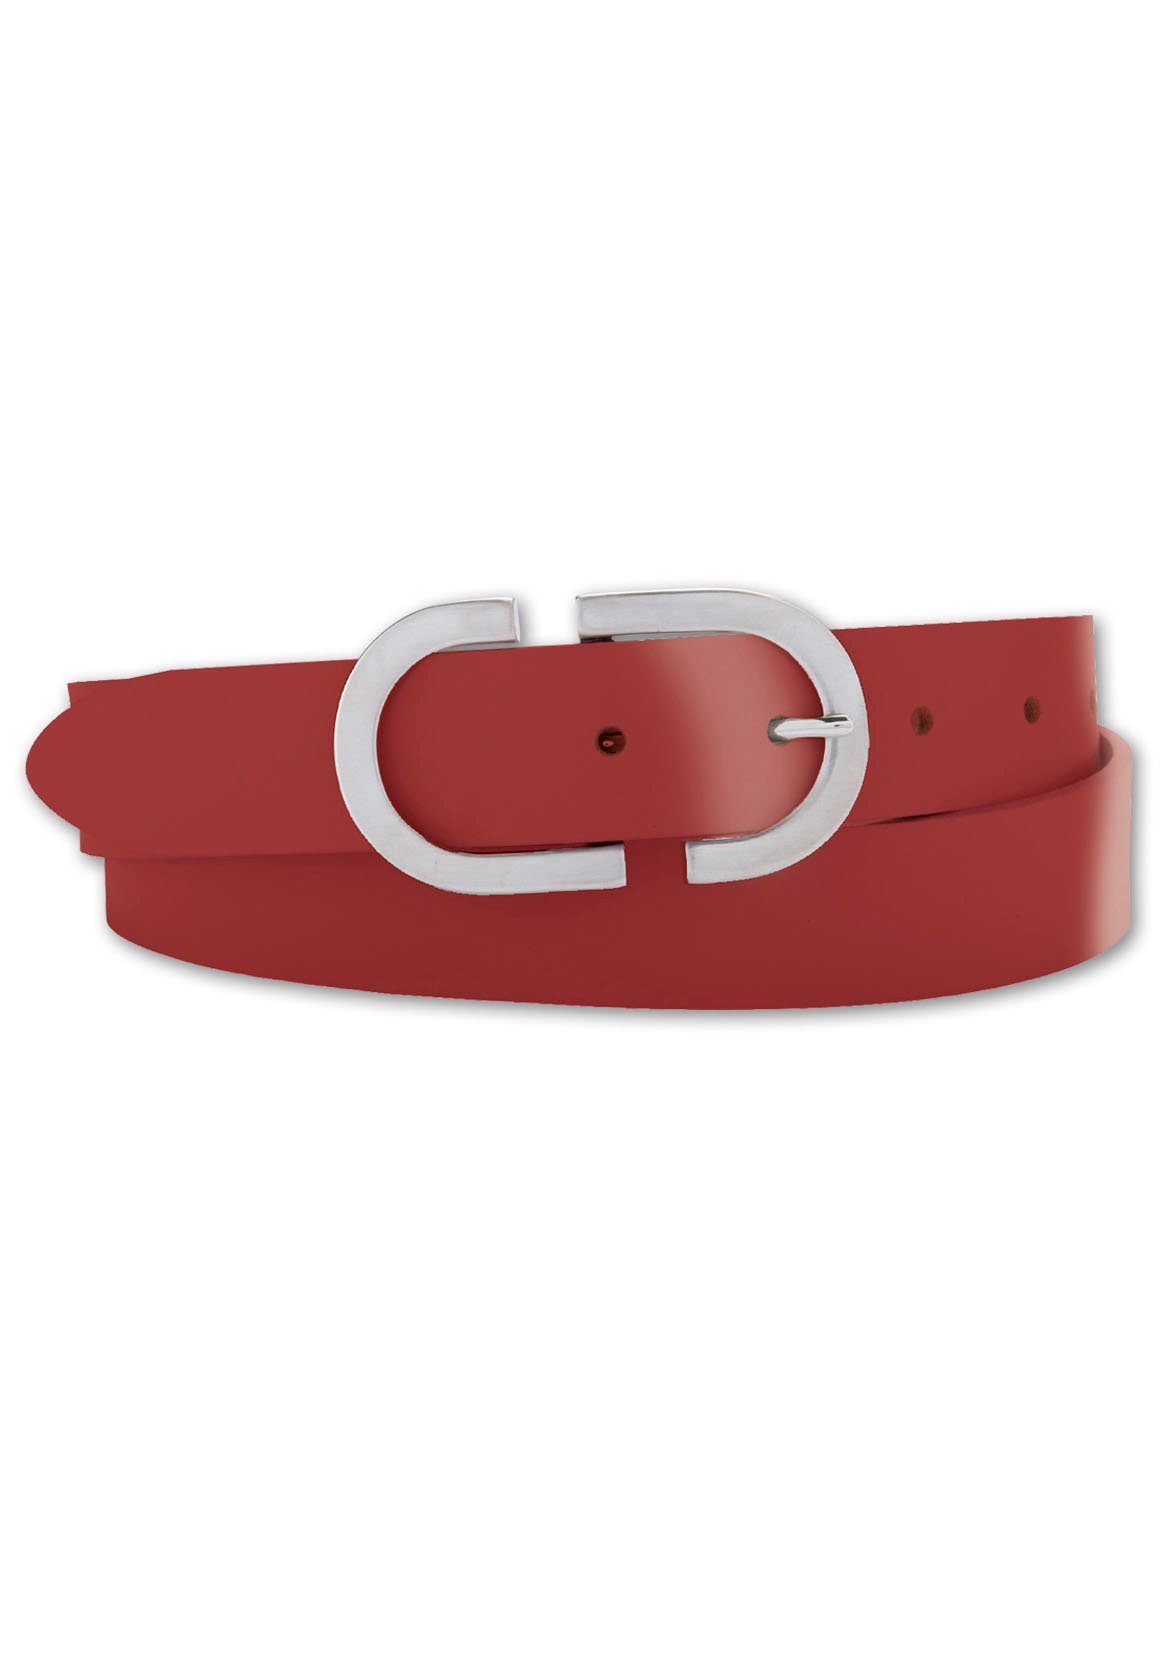 BERND GÖTZ Ledergürtel mit stylischer, kreativer Designschließe rot | Gürtel